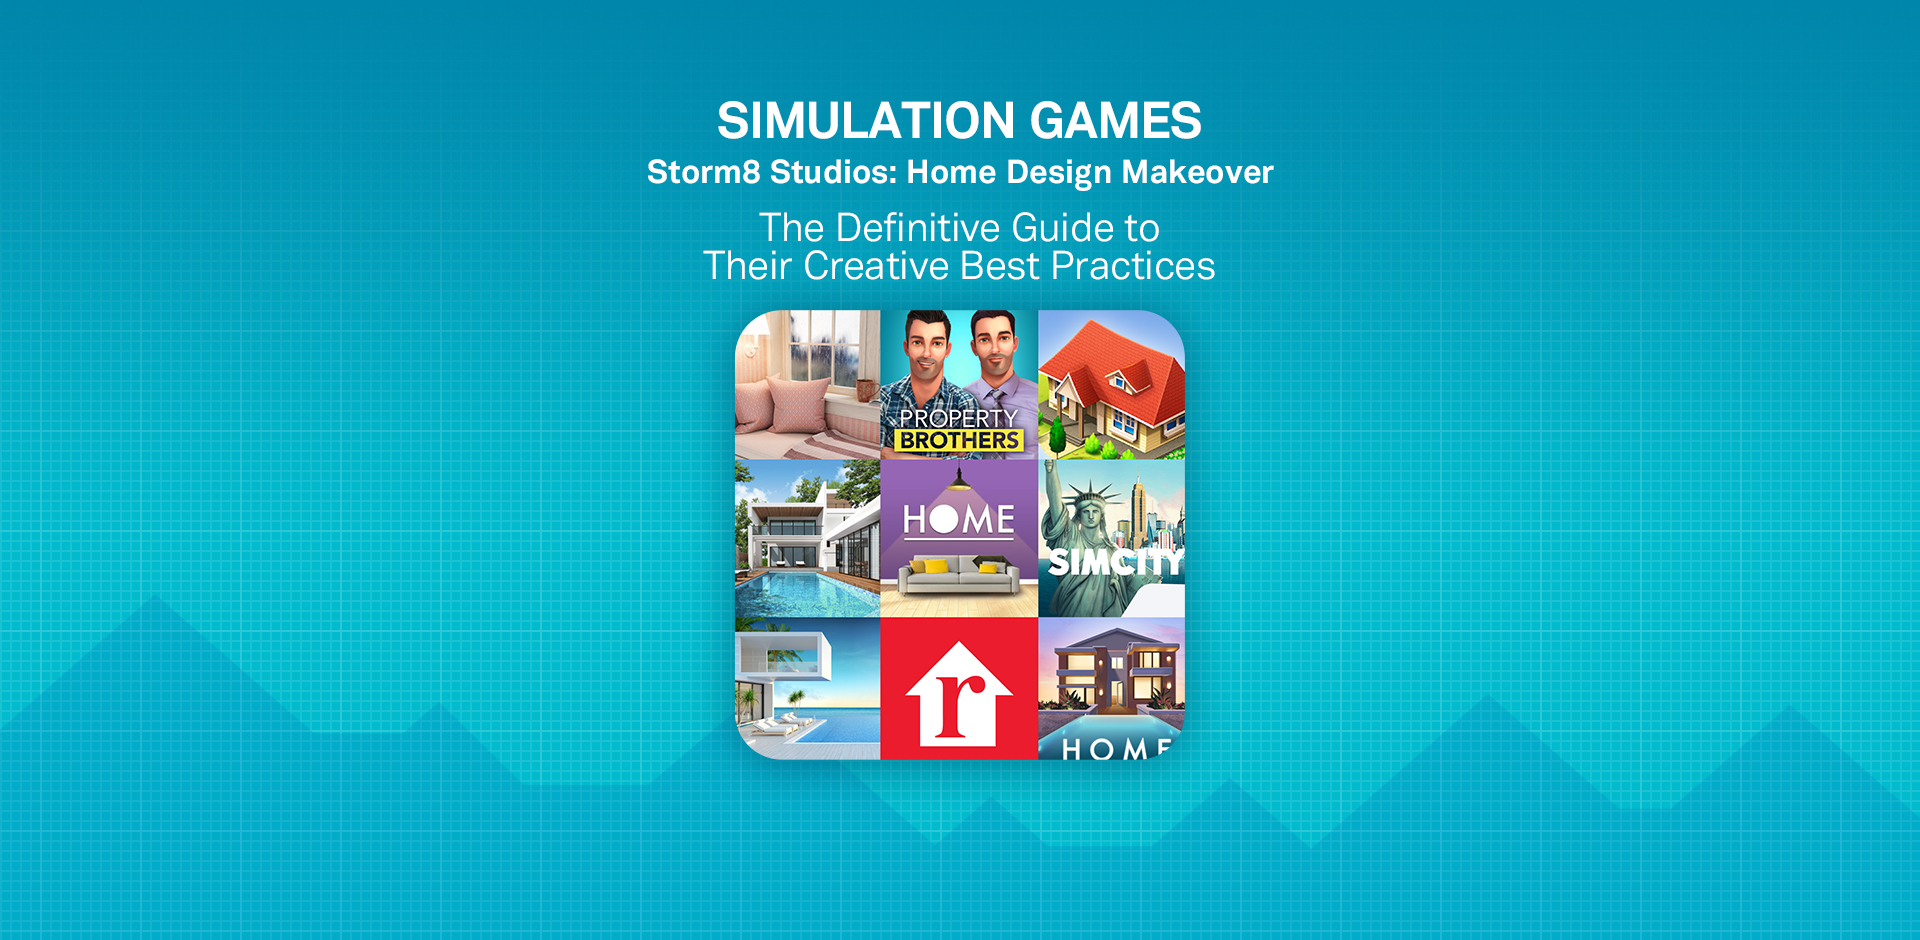 Simulation Games Storm8 Studios’ Home Design Makeover Creative Strategy